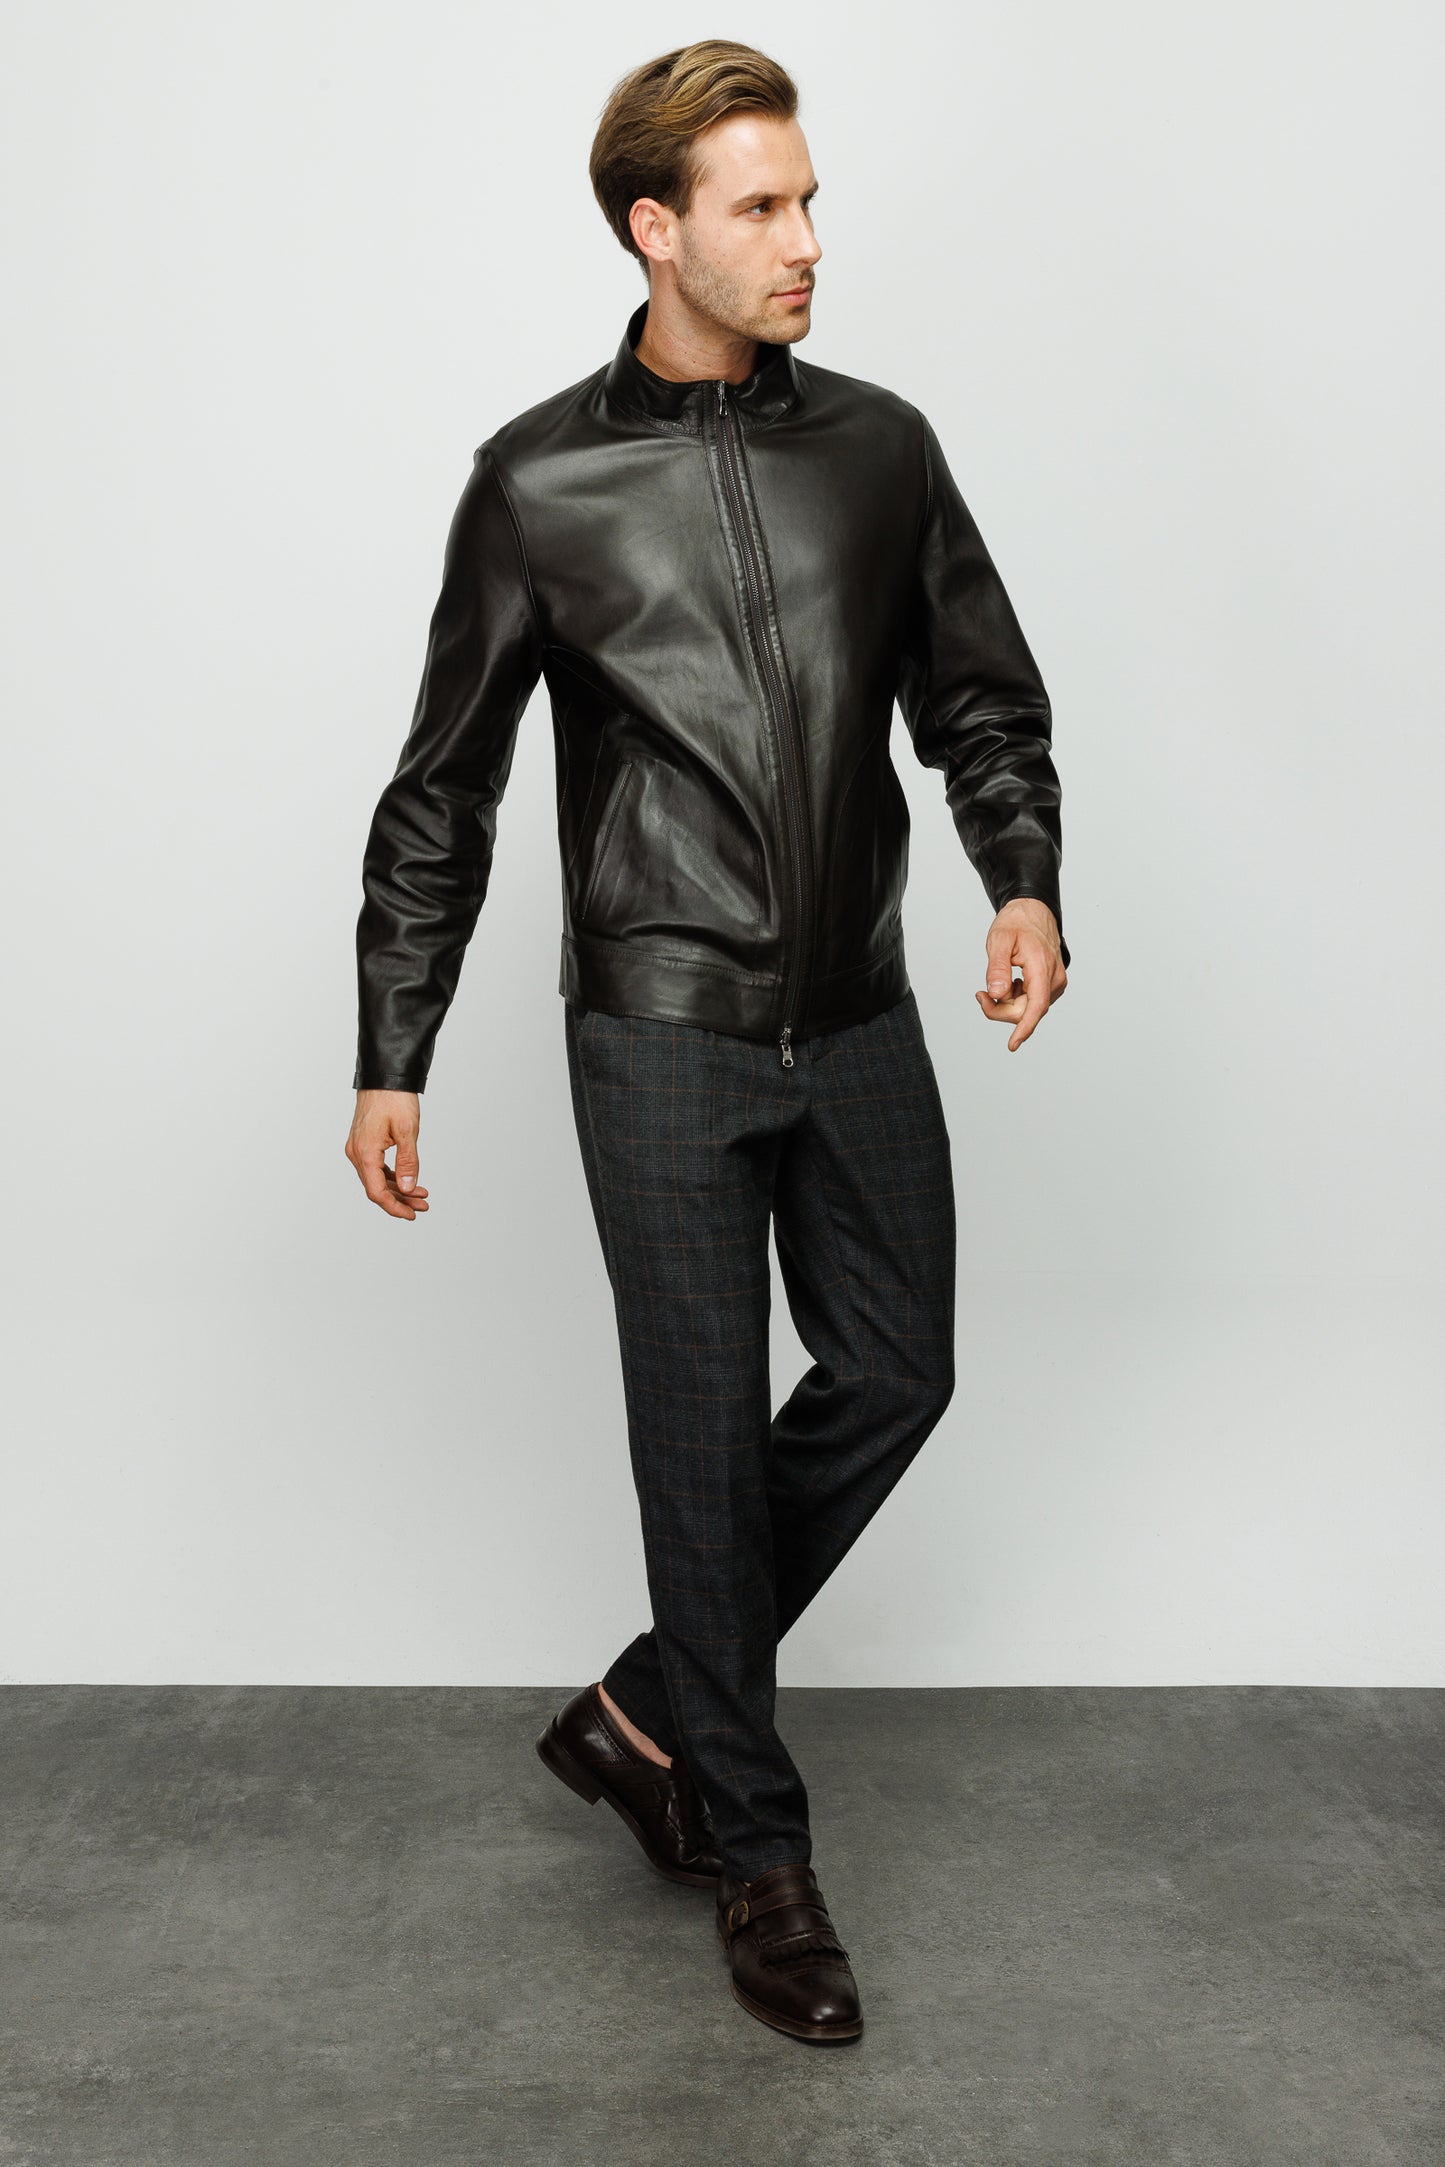 The Del Rio Leather Black Men Jacket